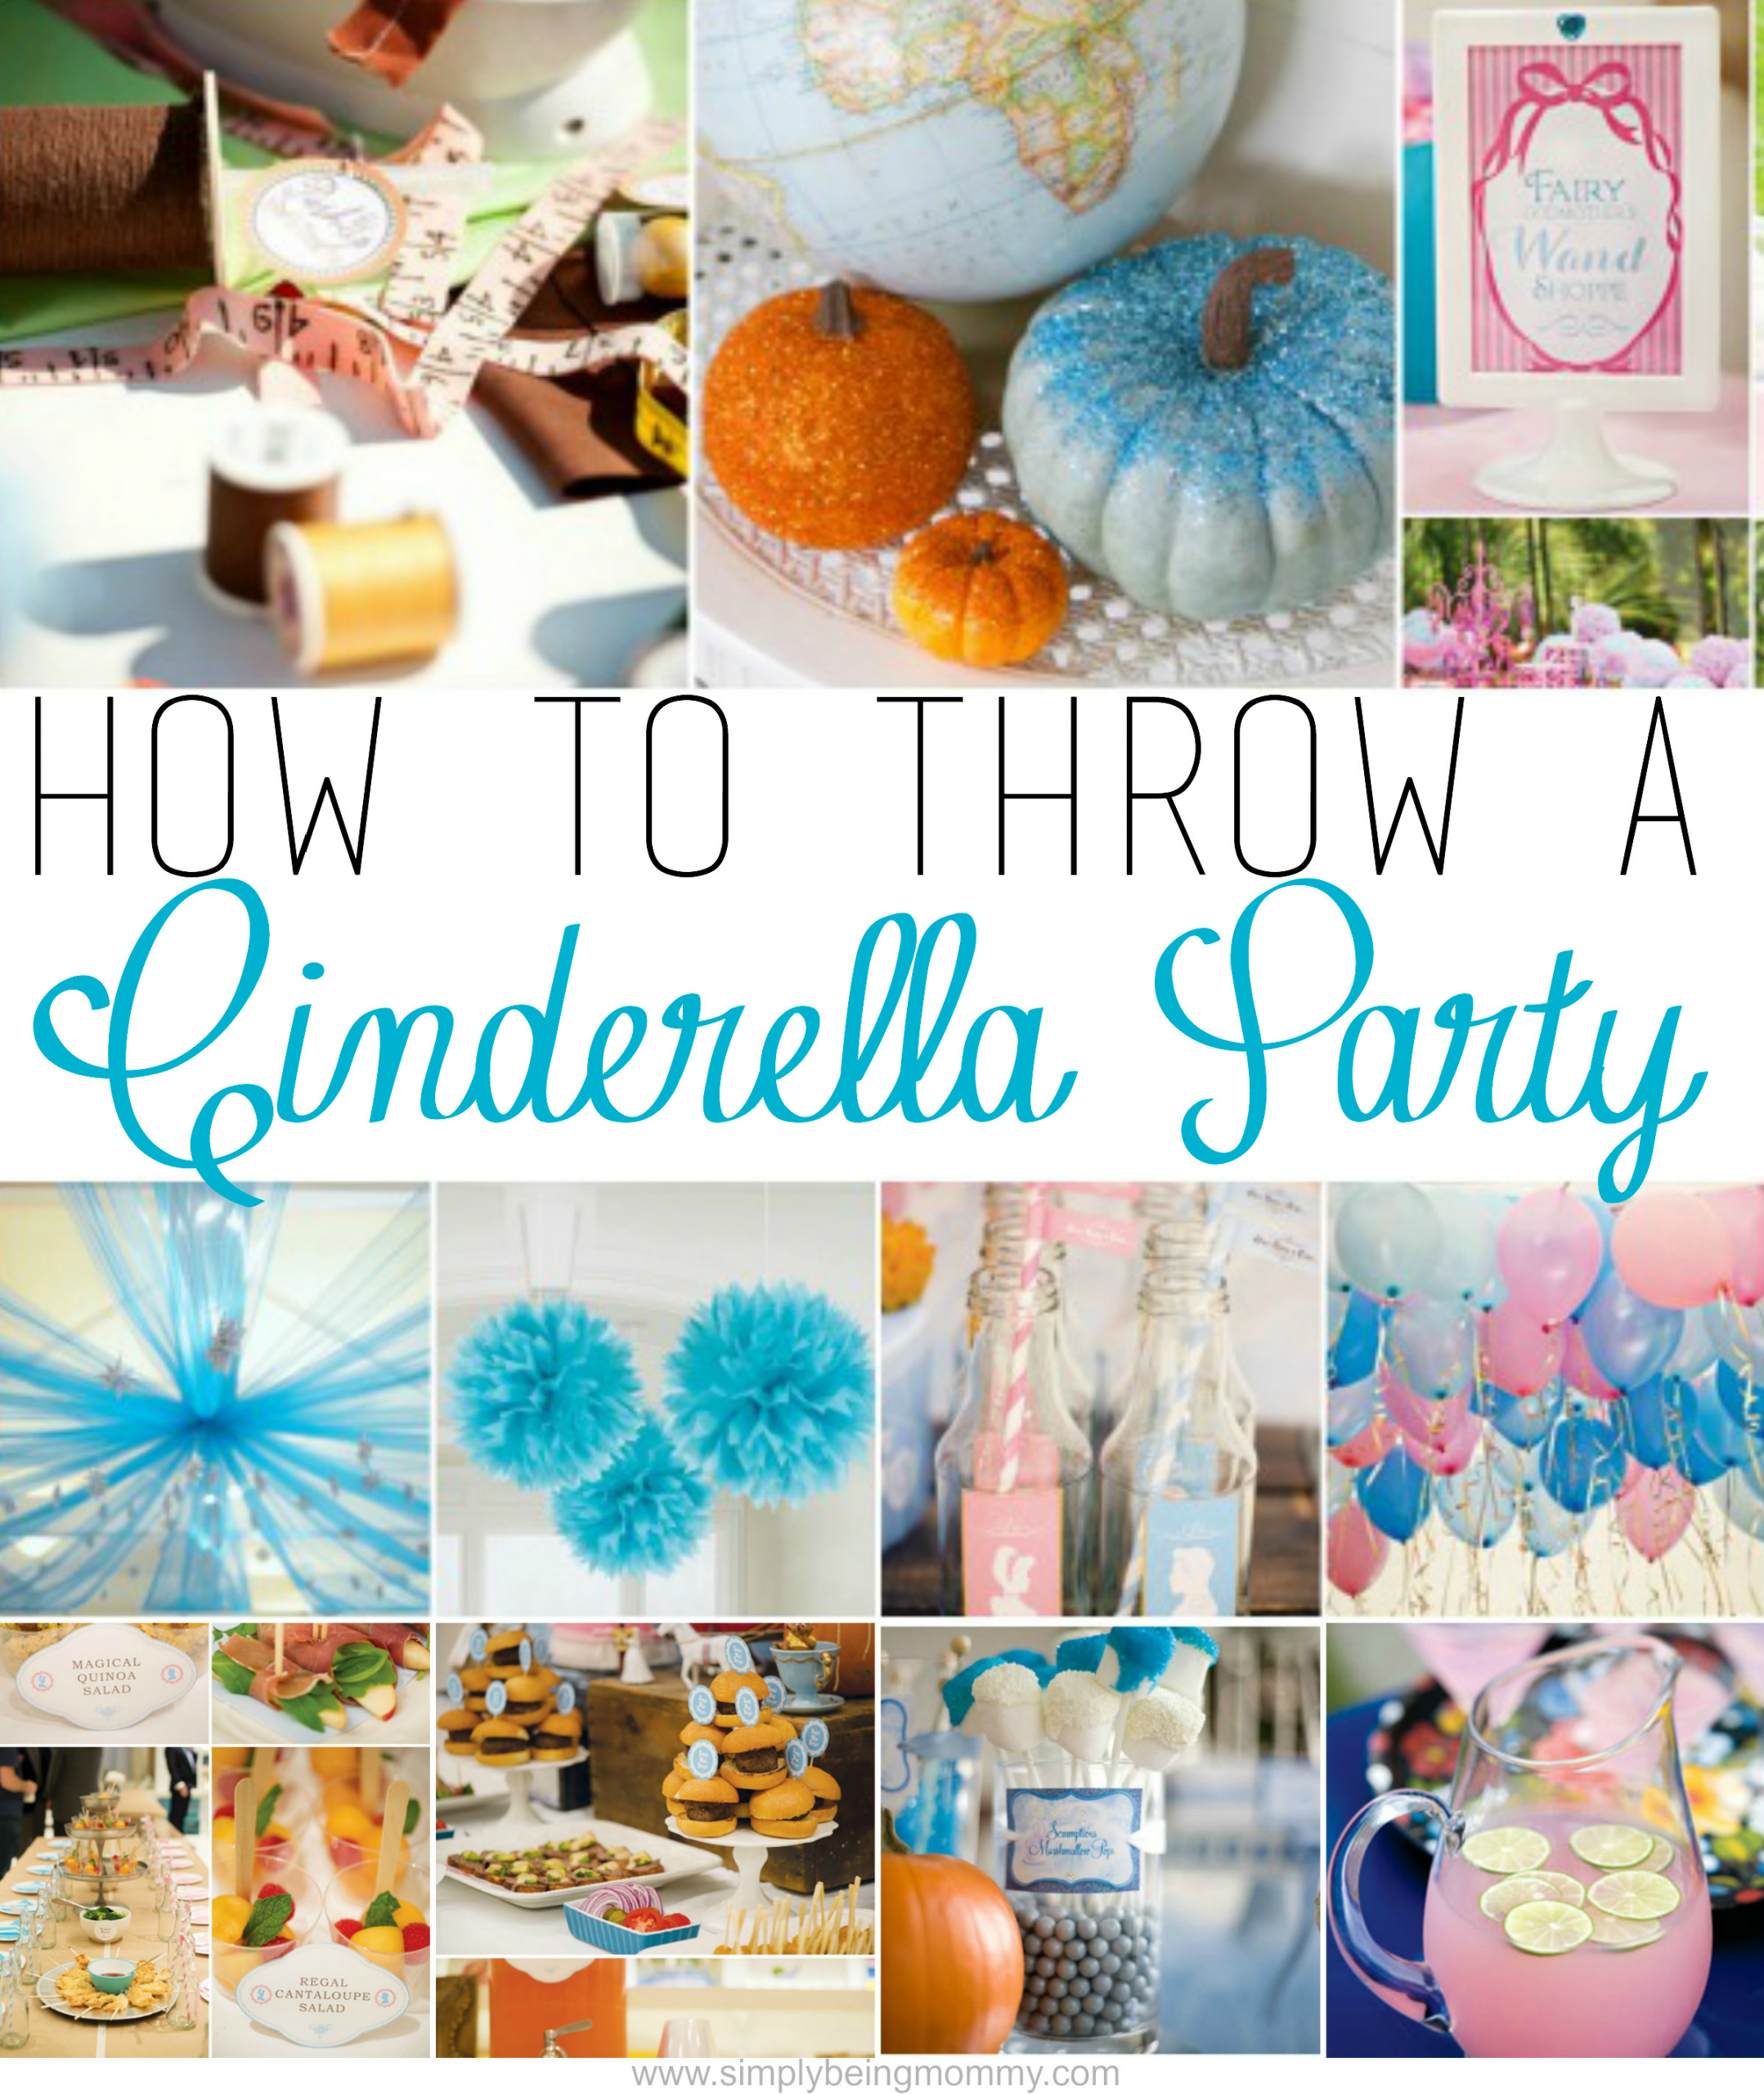 Cinderella Party Food Ideas
 How to Throw a Cinderella Party